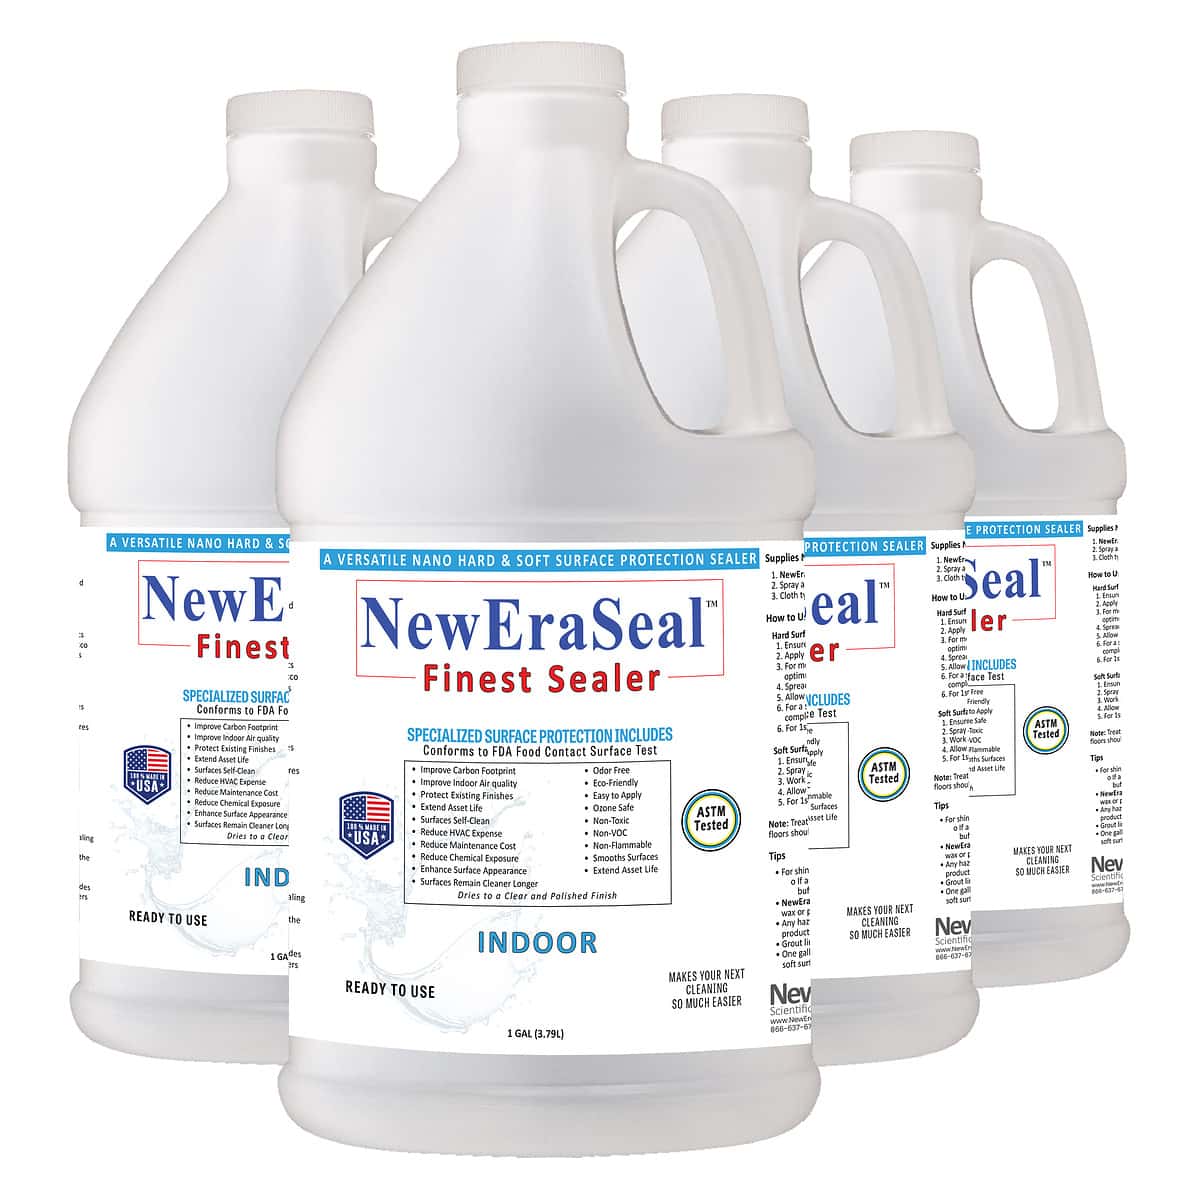 NewEraSeal Finest Sealer 4/1-gallon bottle